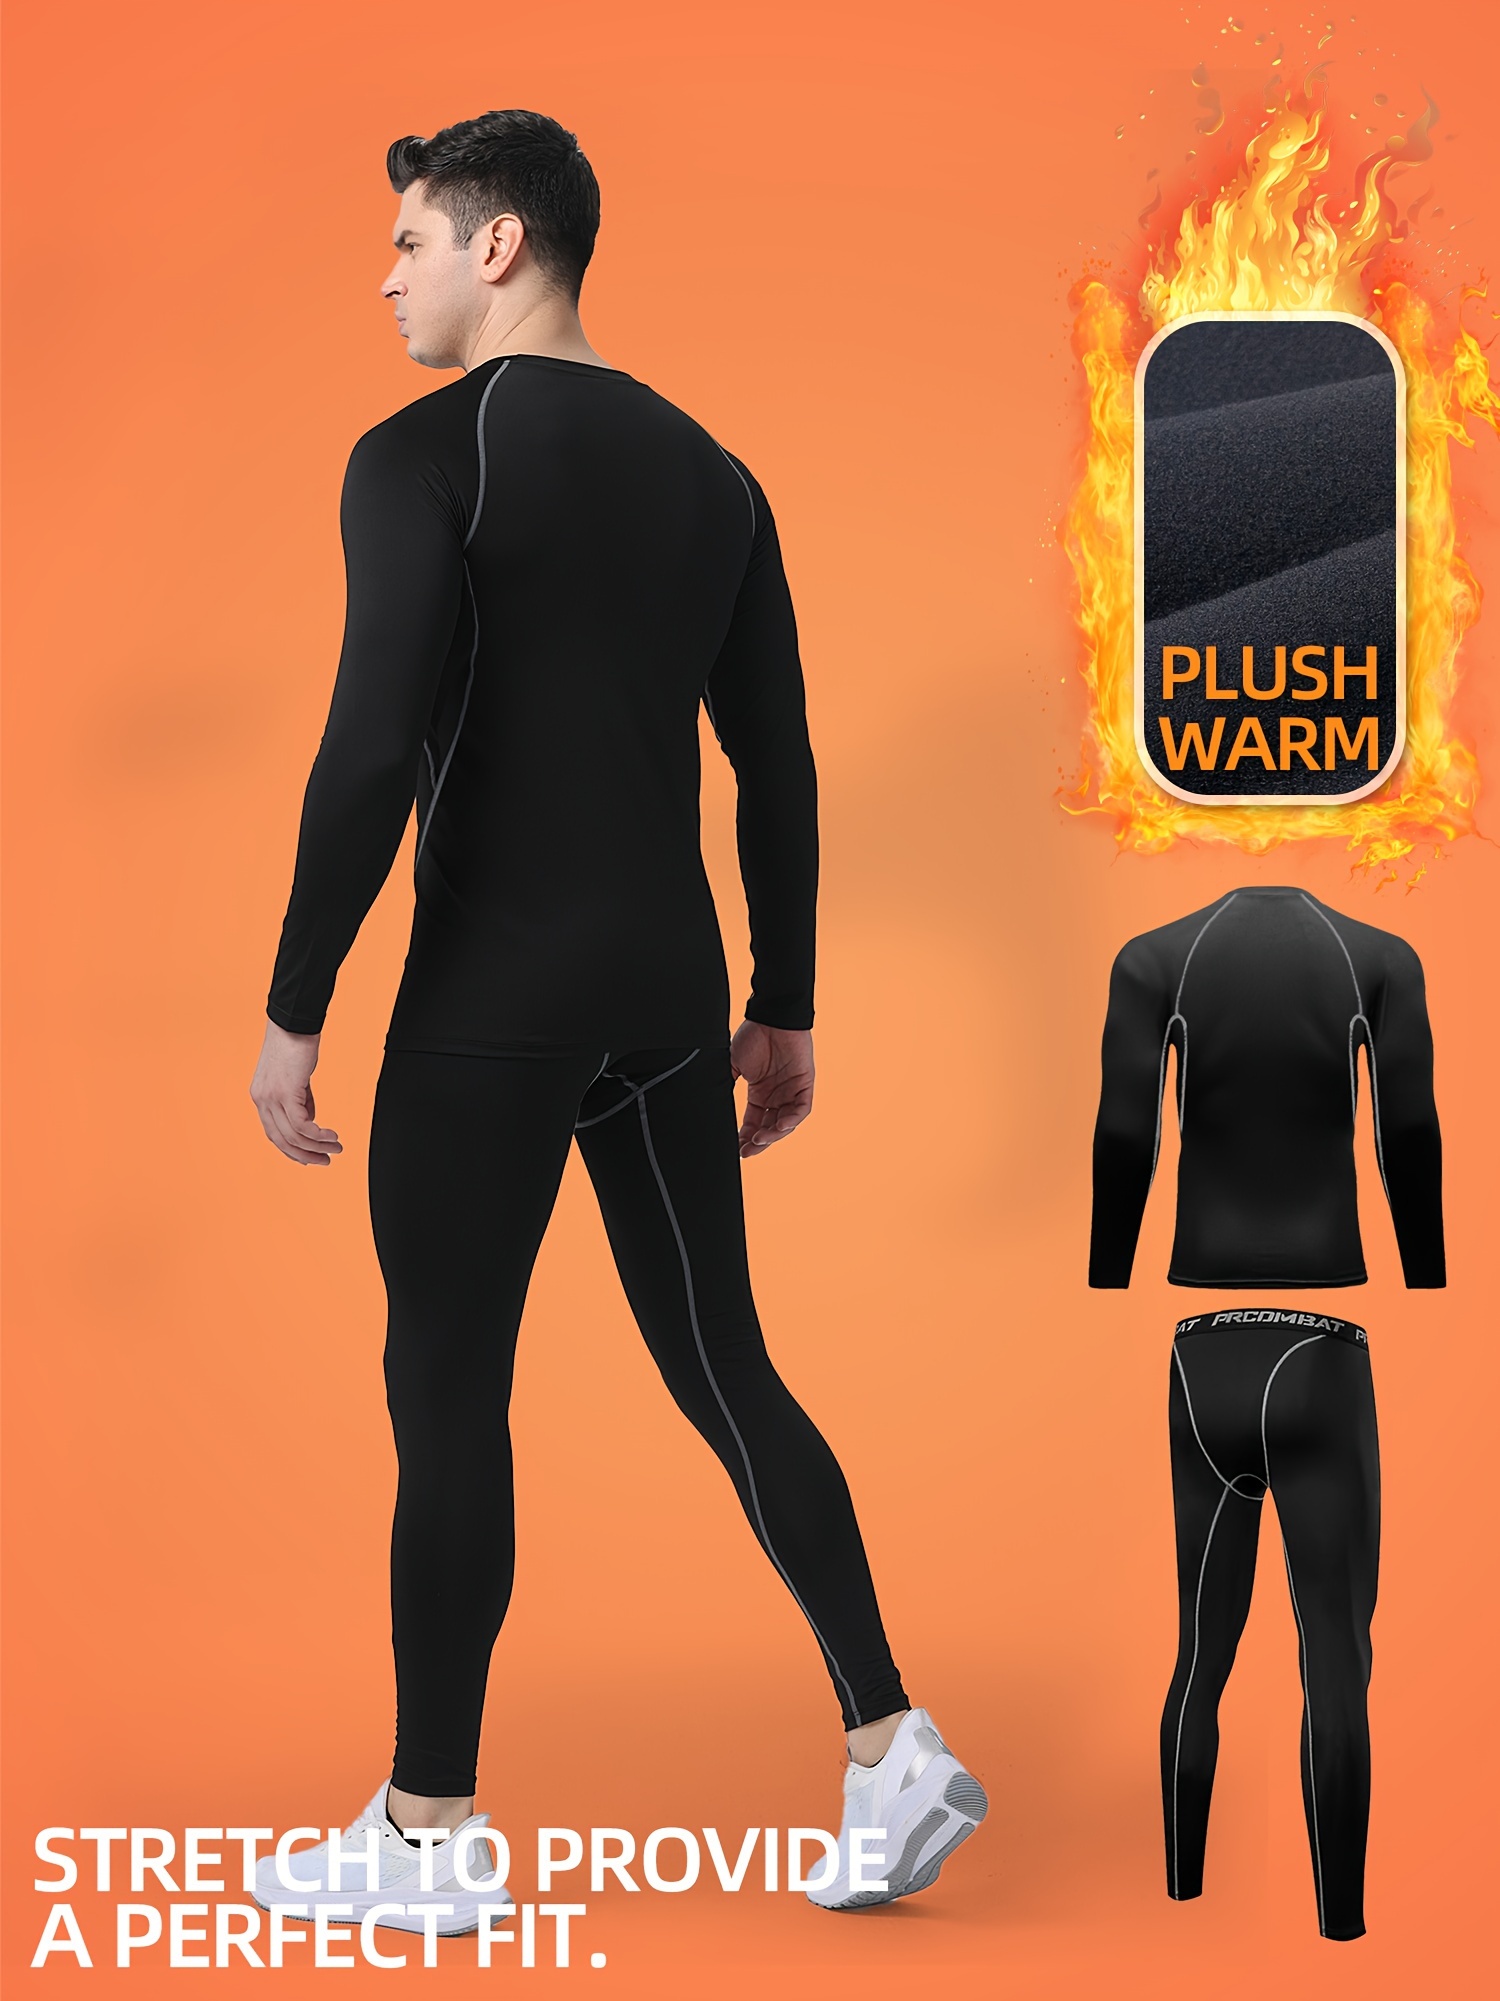 relayinert Winter Shirt Thermal Underwear Warm Autumn Fitness Long